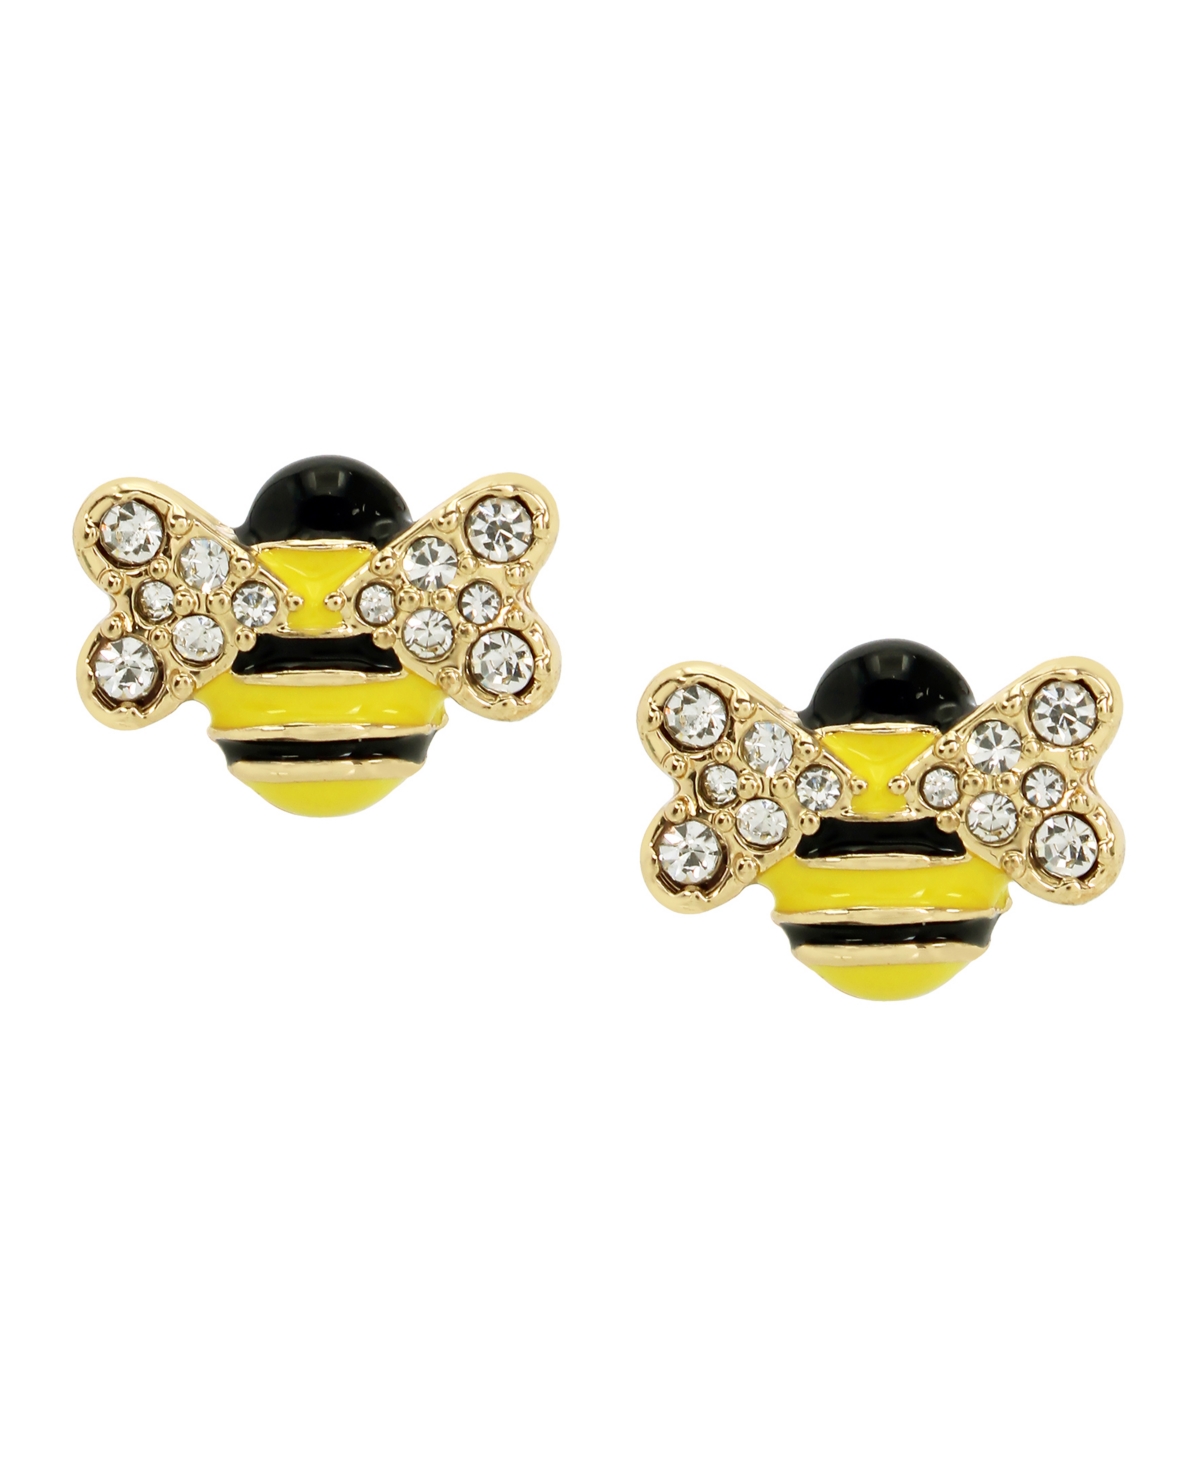 Faux Stone Bee Stud Earrings - Yellow, Gold